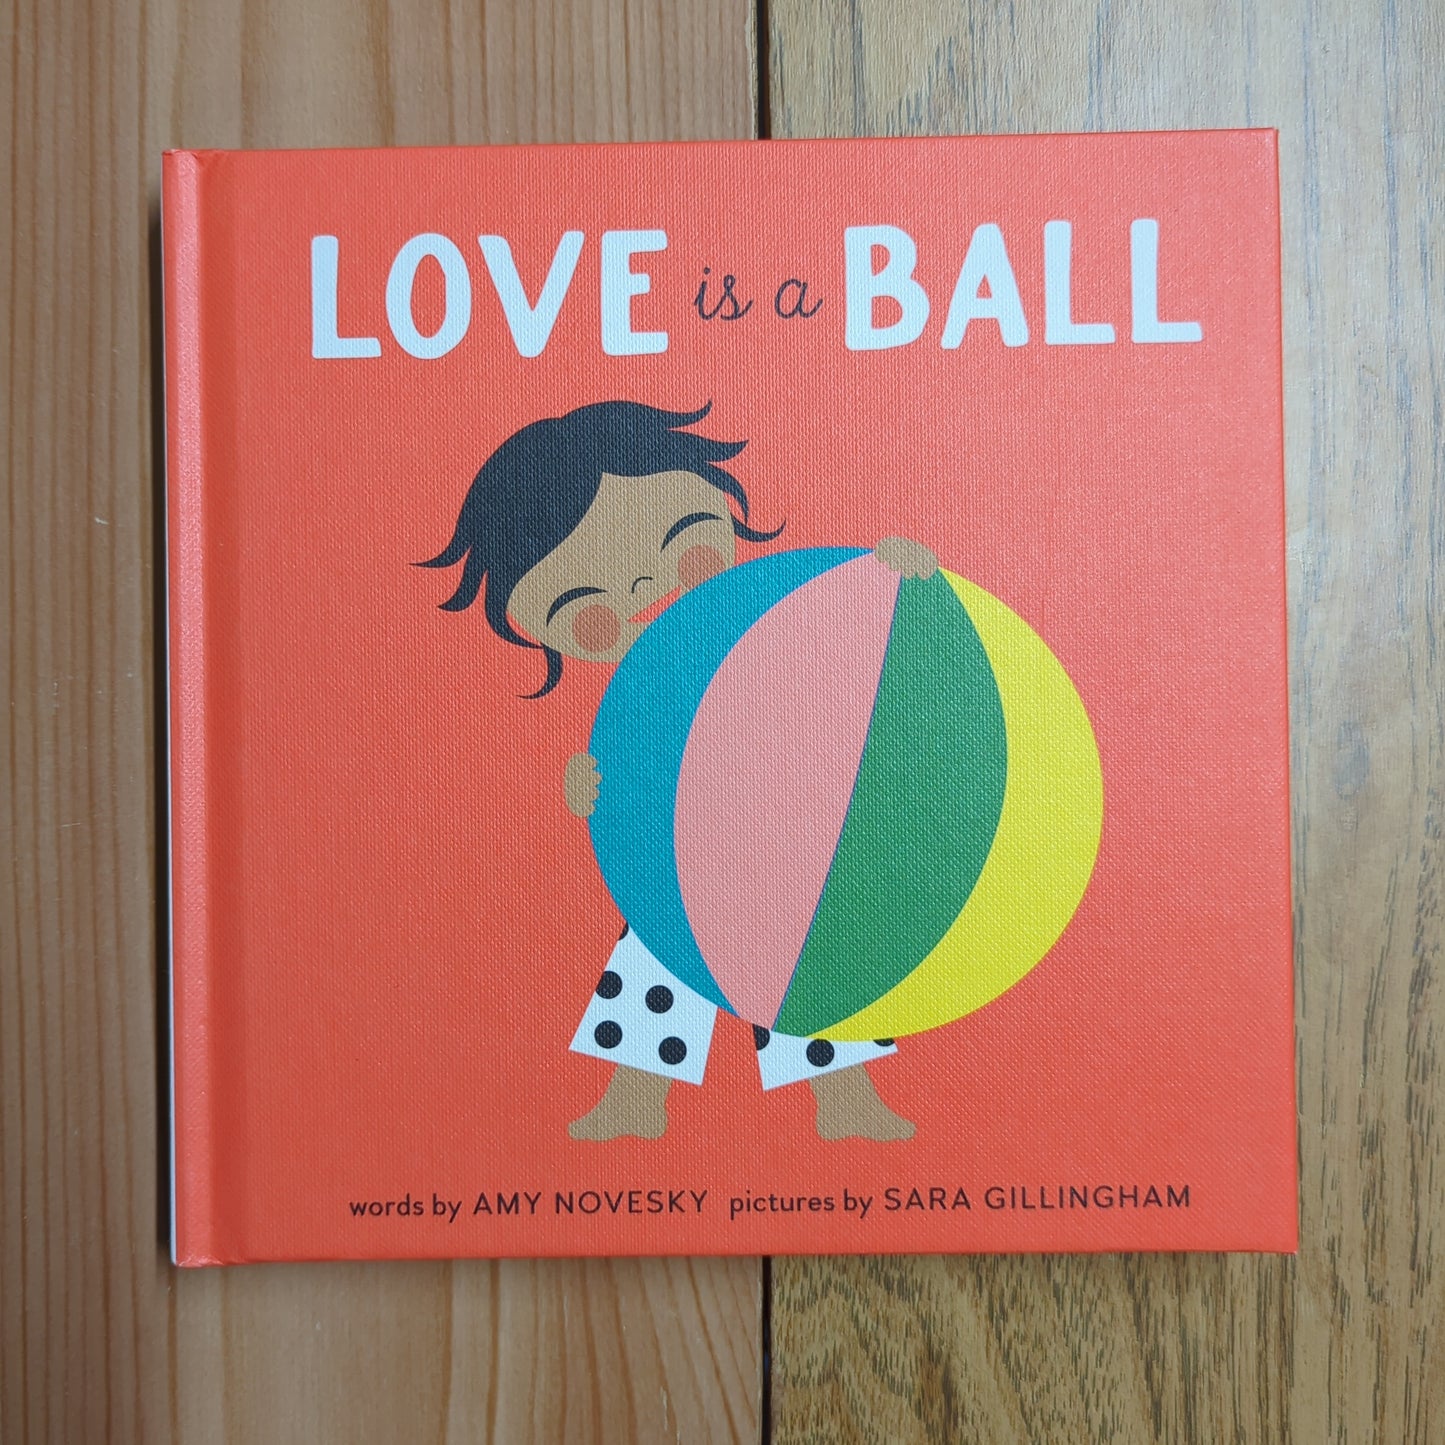 Love is a Ball